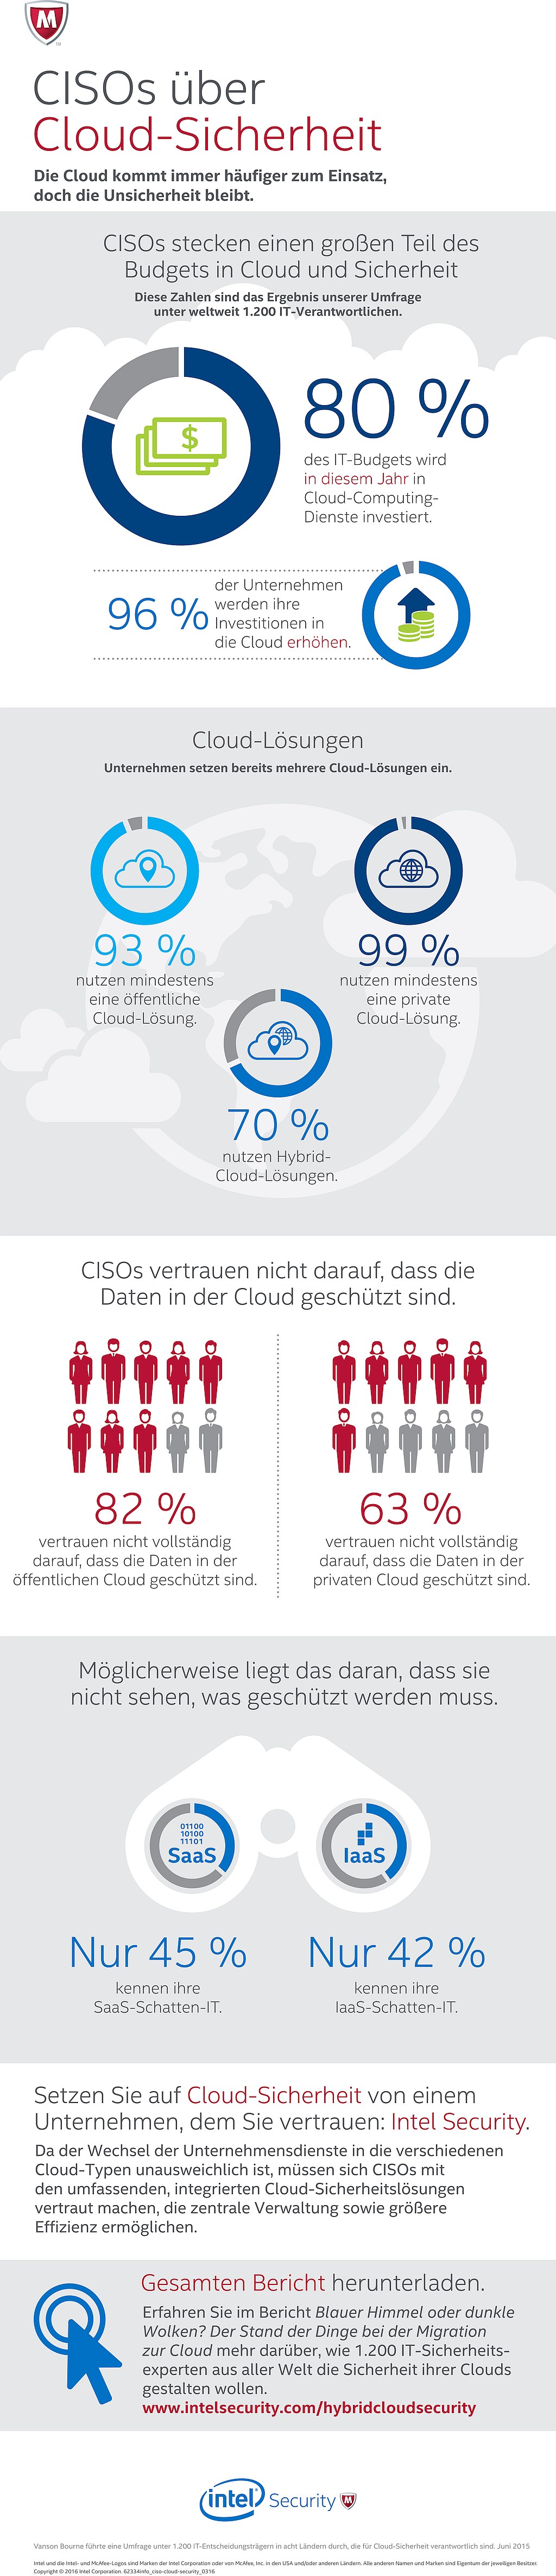 infografi Intel Security - CISOs über Cloud-Sicherheit